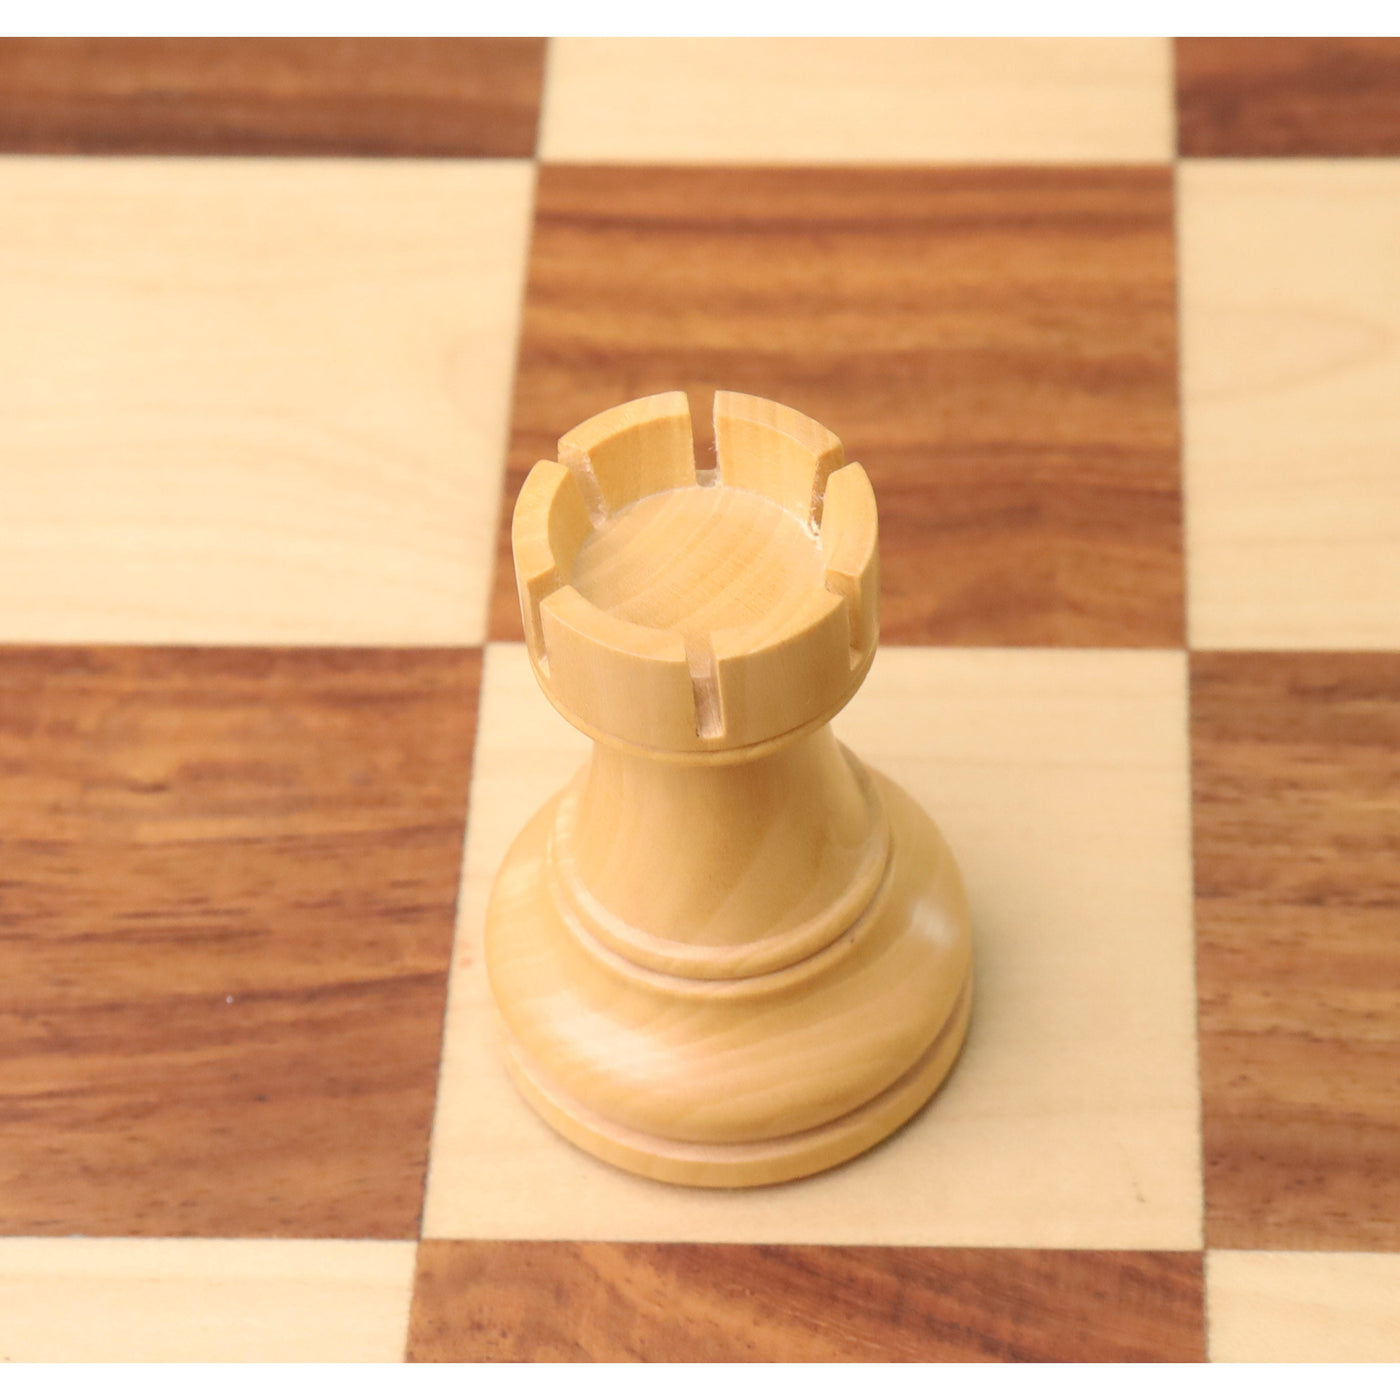 3.8" Reykjavik Series Staunton Wooden Chess Set - Chess Pieces Only - Weighted Sheesham Wood